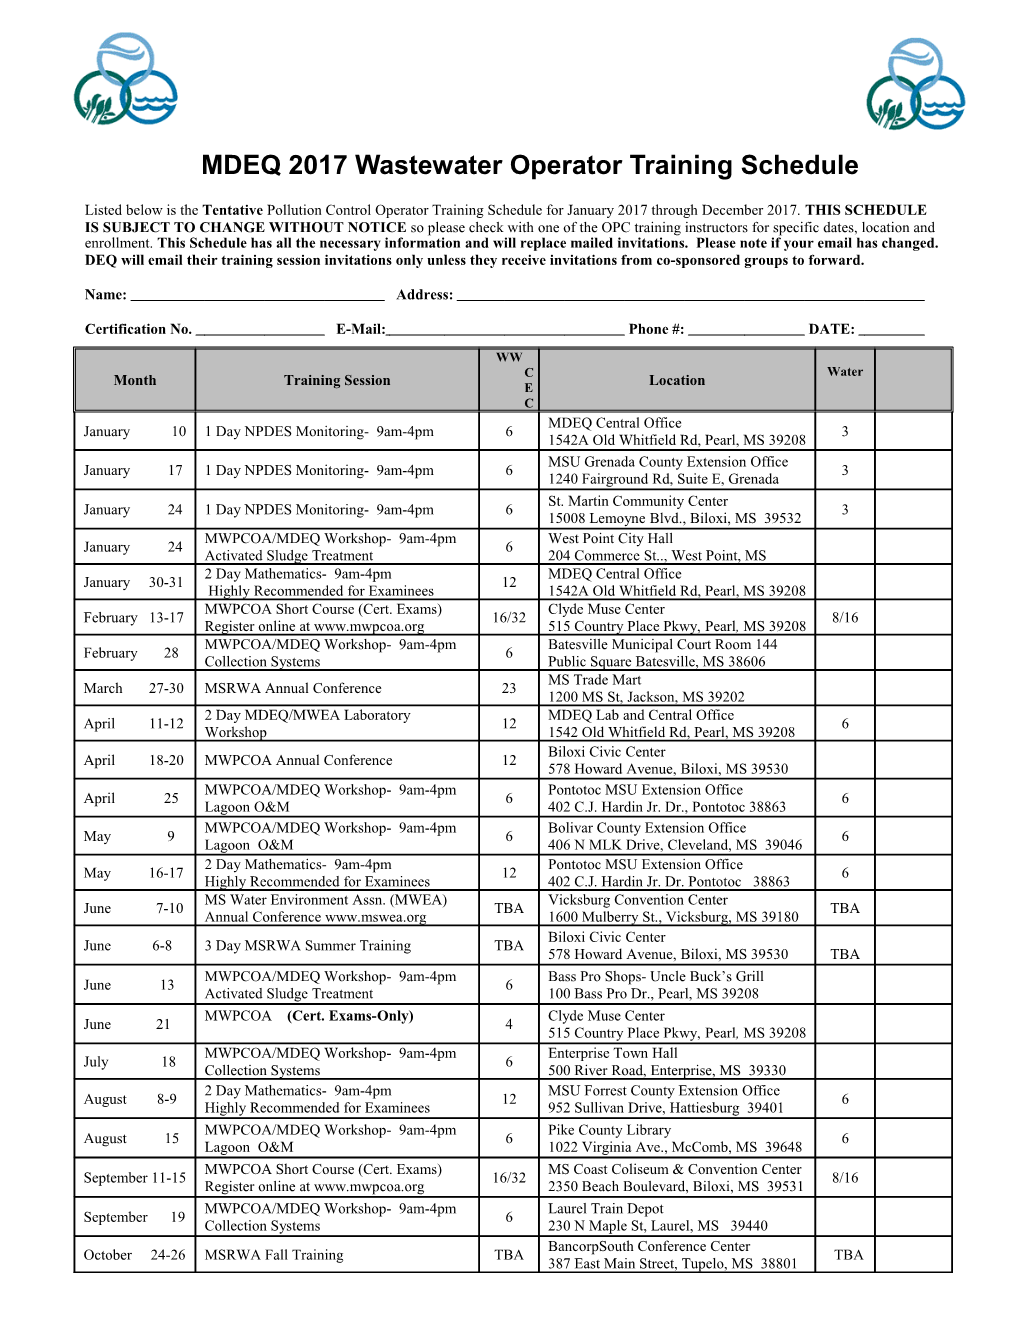 MDEQ 2002 Wastewater Operator Training Schedule